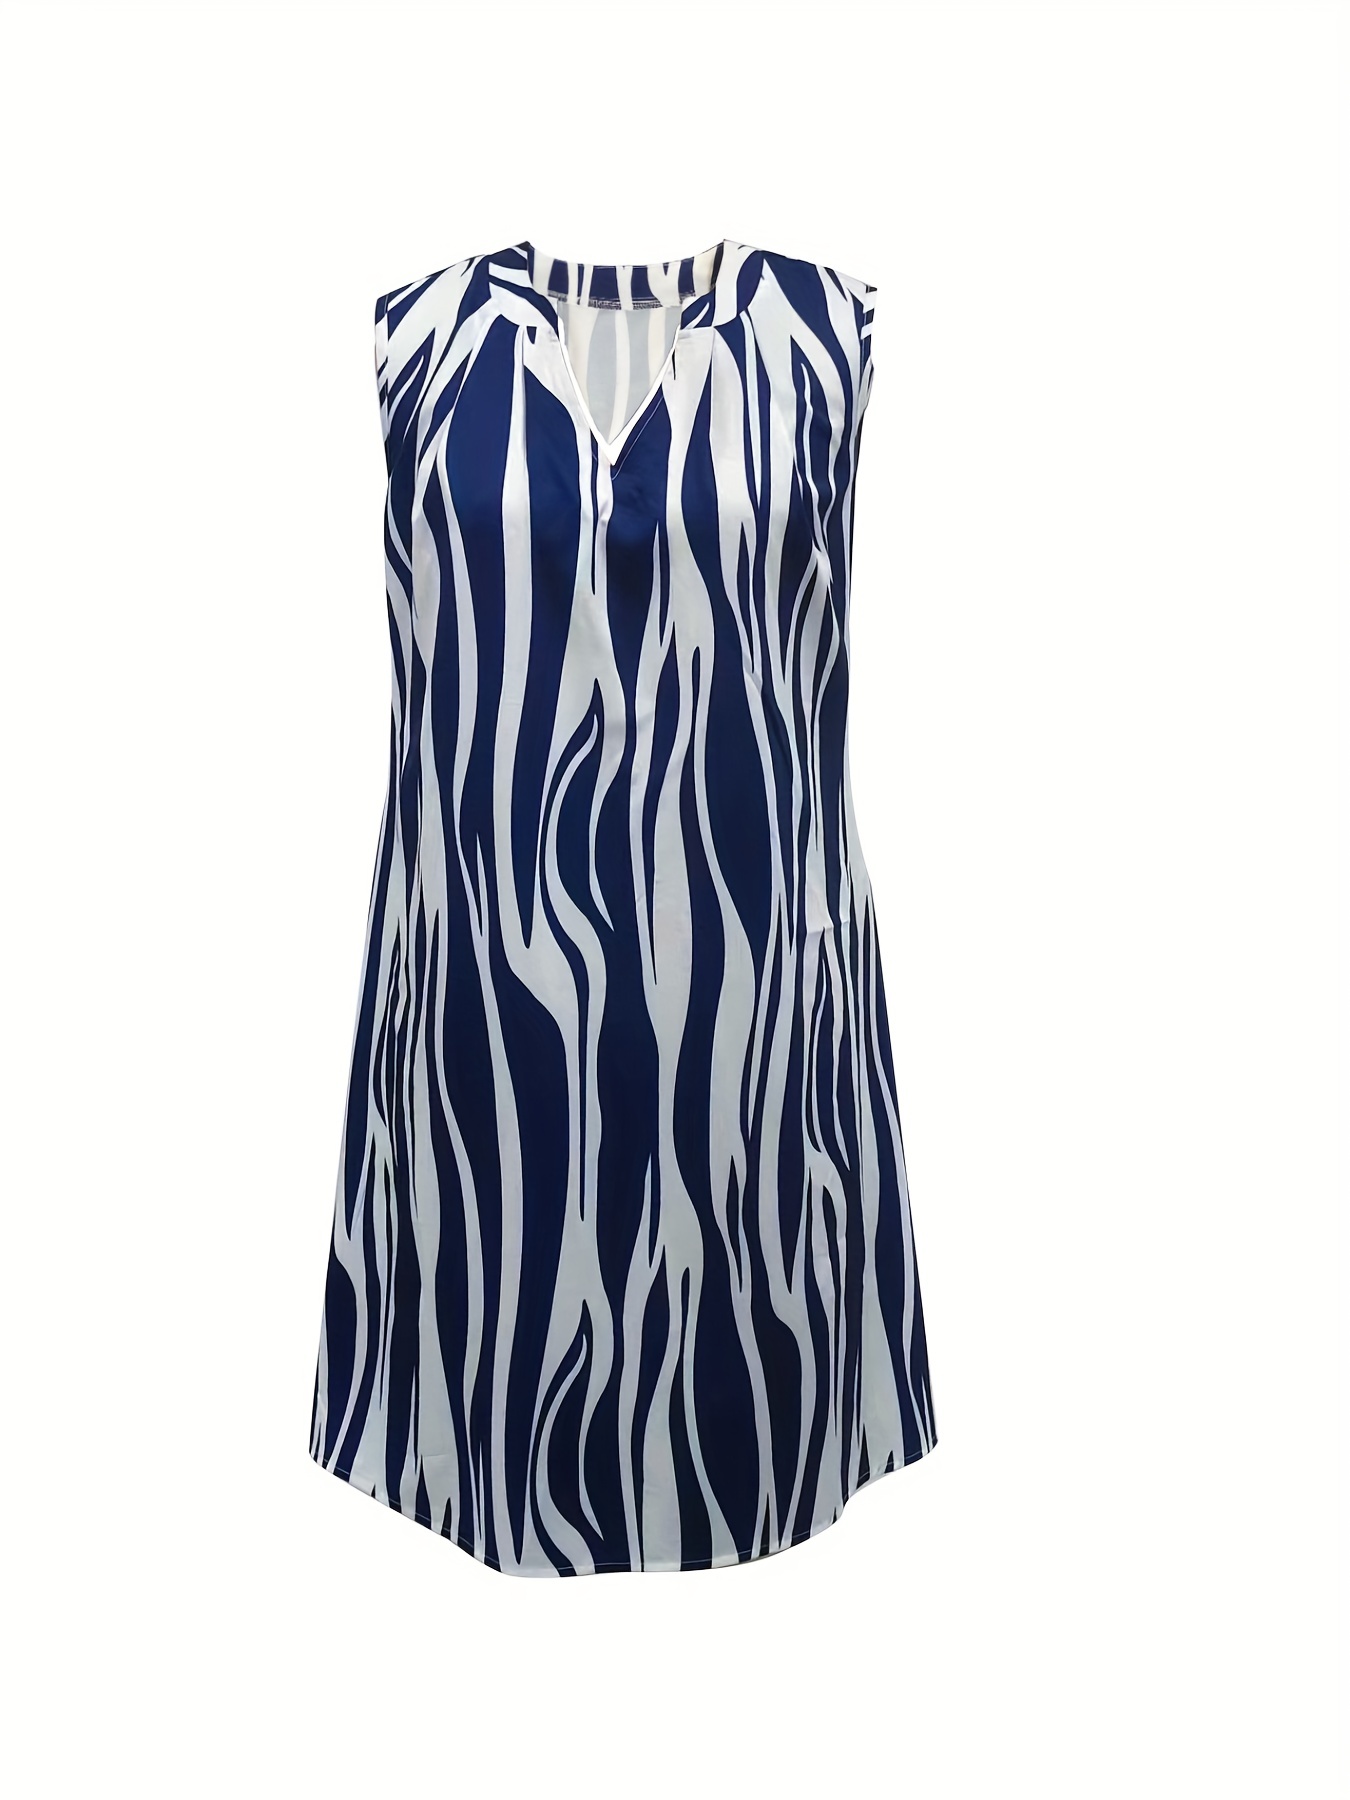 abstract ripple print dress casual v neck sleeveless dress womens clothing details 57